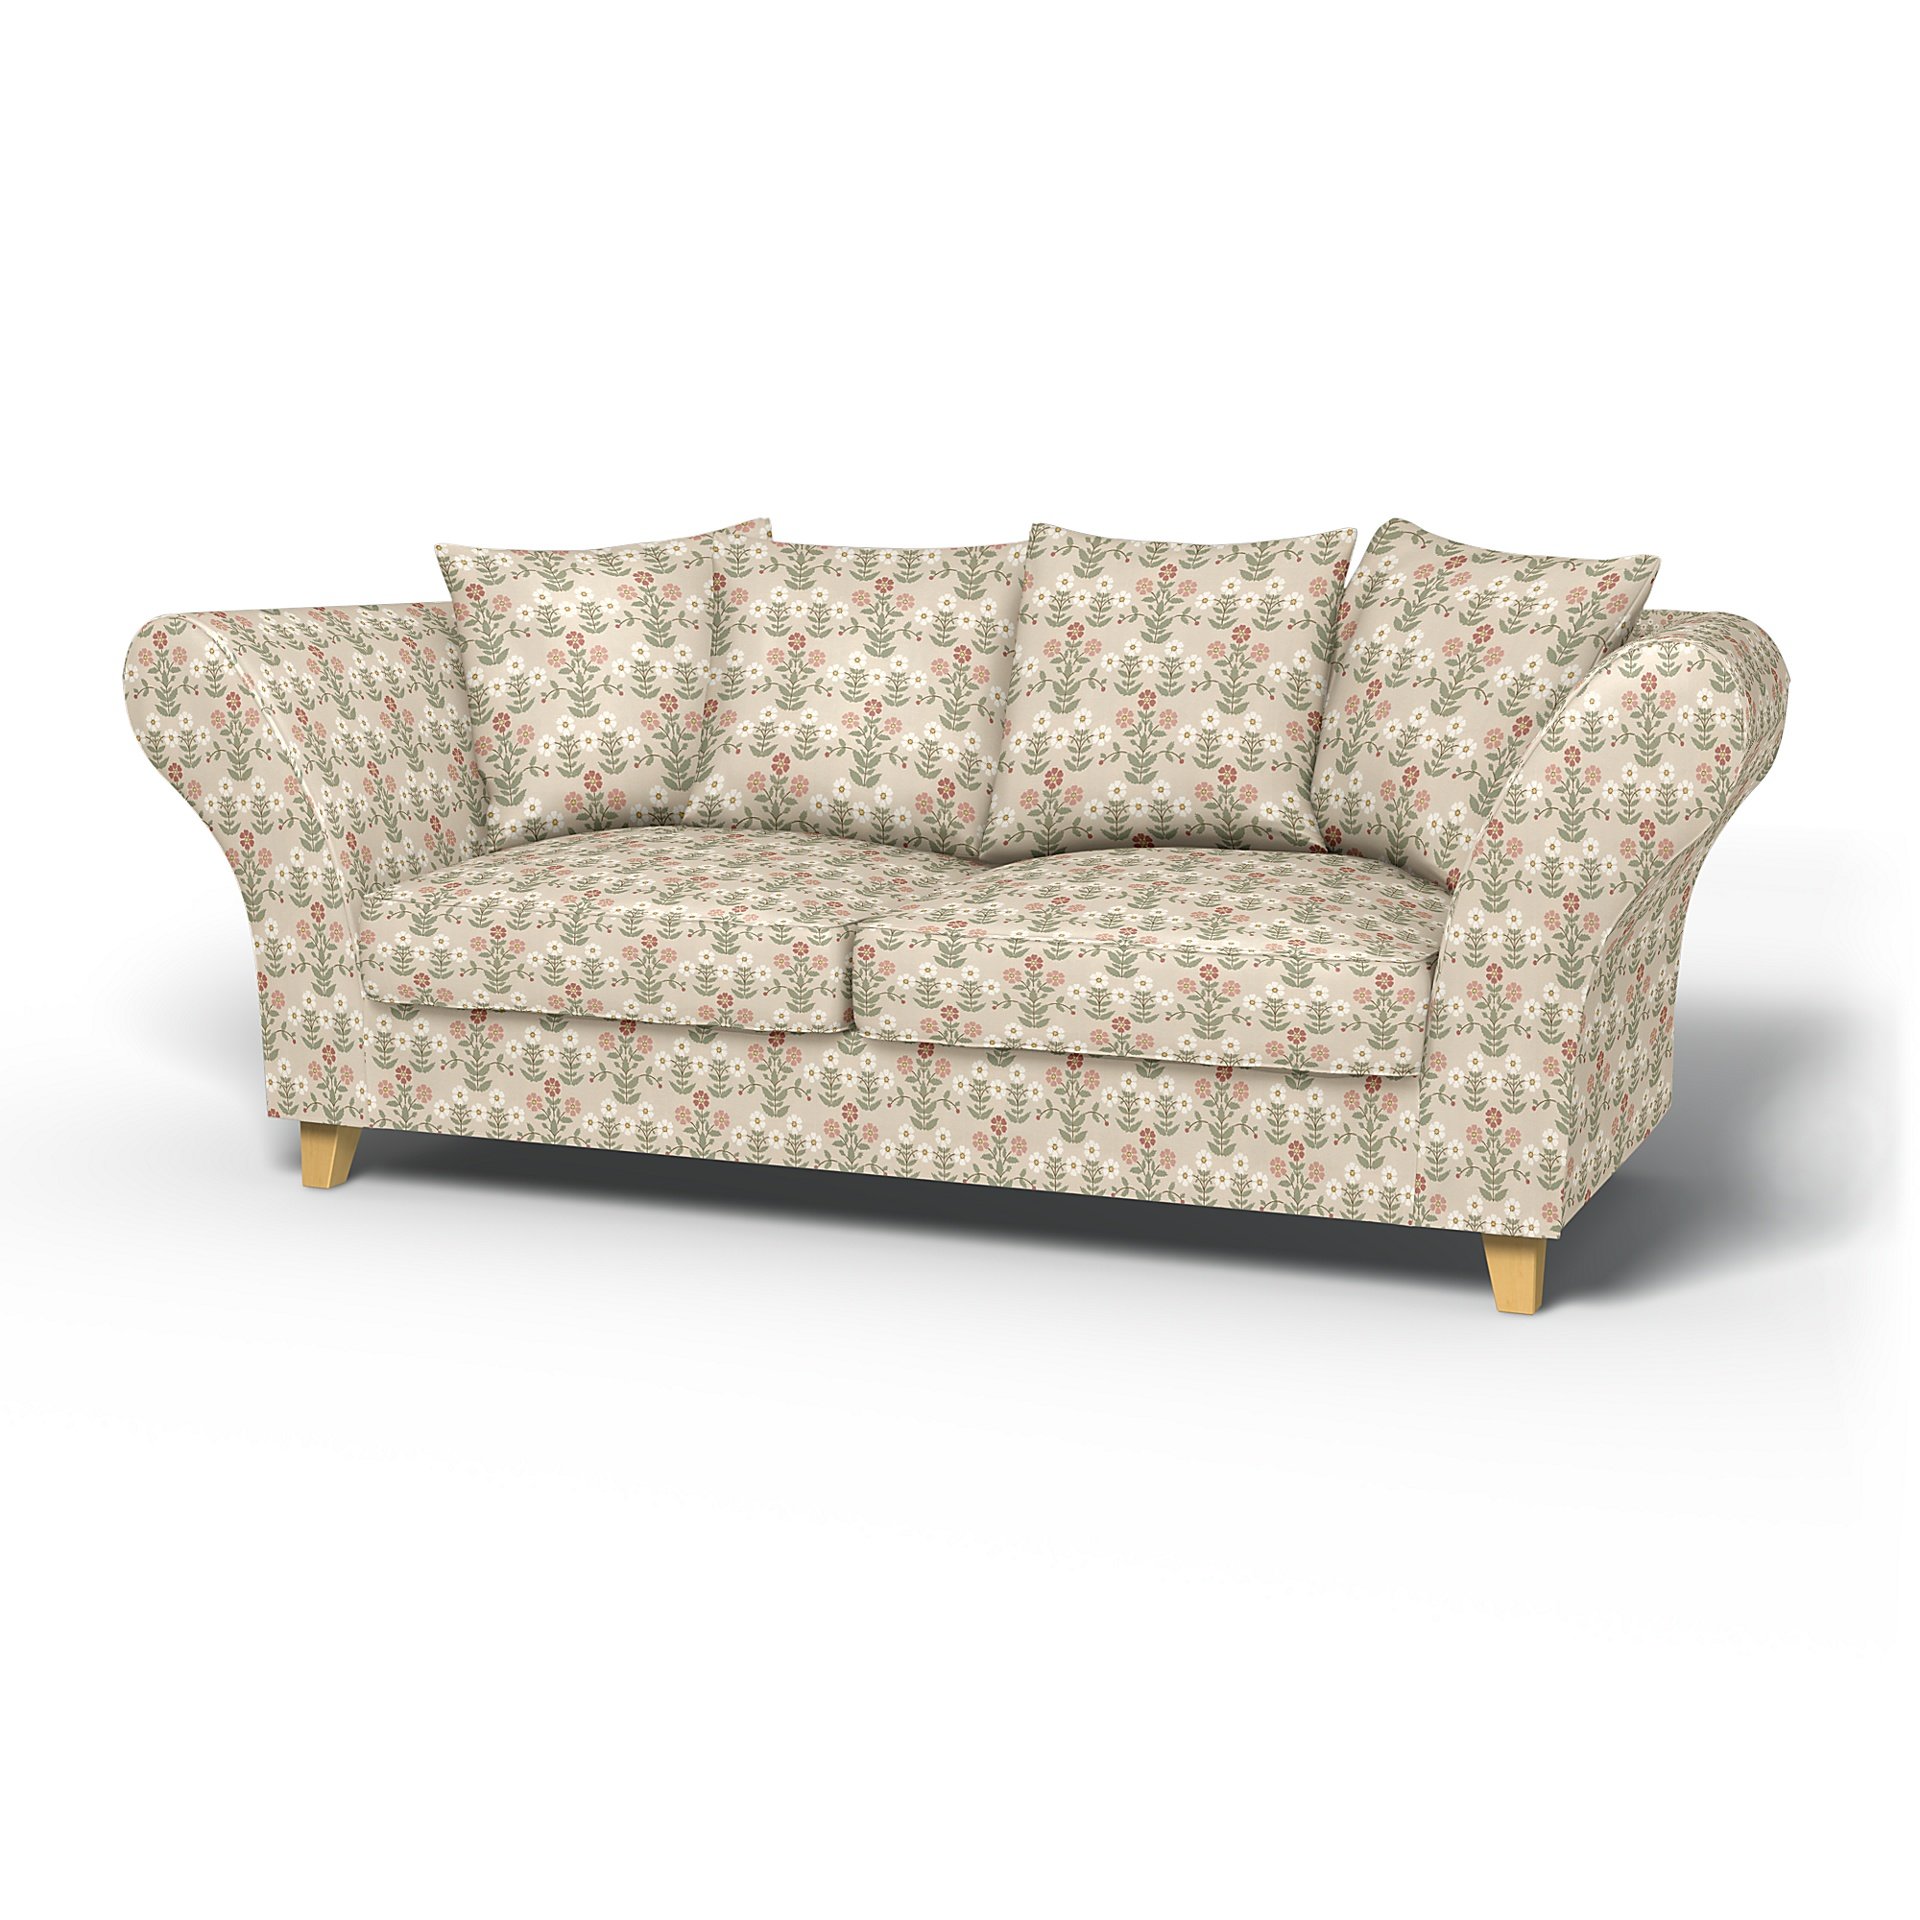 IKEA - Backa 2.5 Seater Sofa Cover, Pink Sippor, BEMZ x BORASTAPETER COLLECTION - Bemz